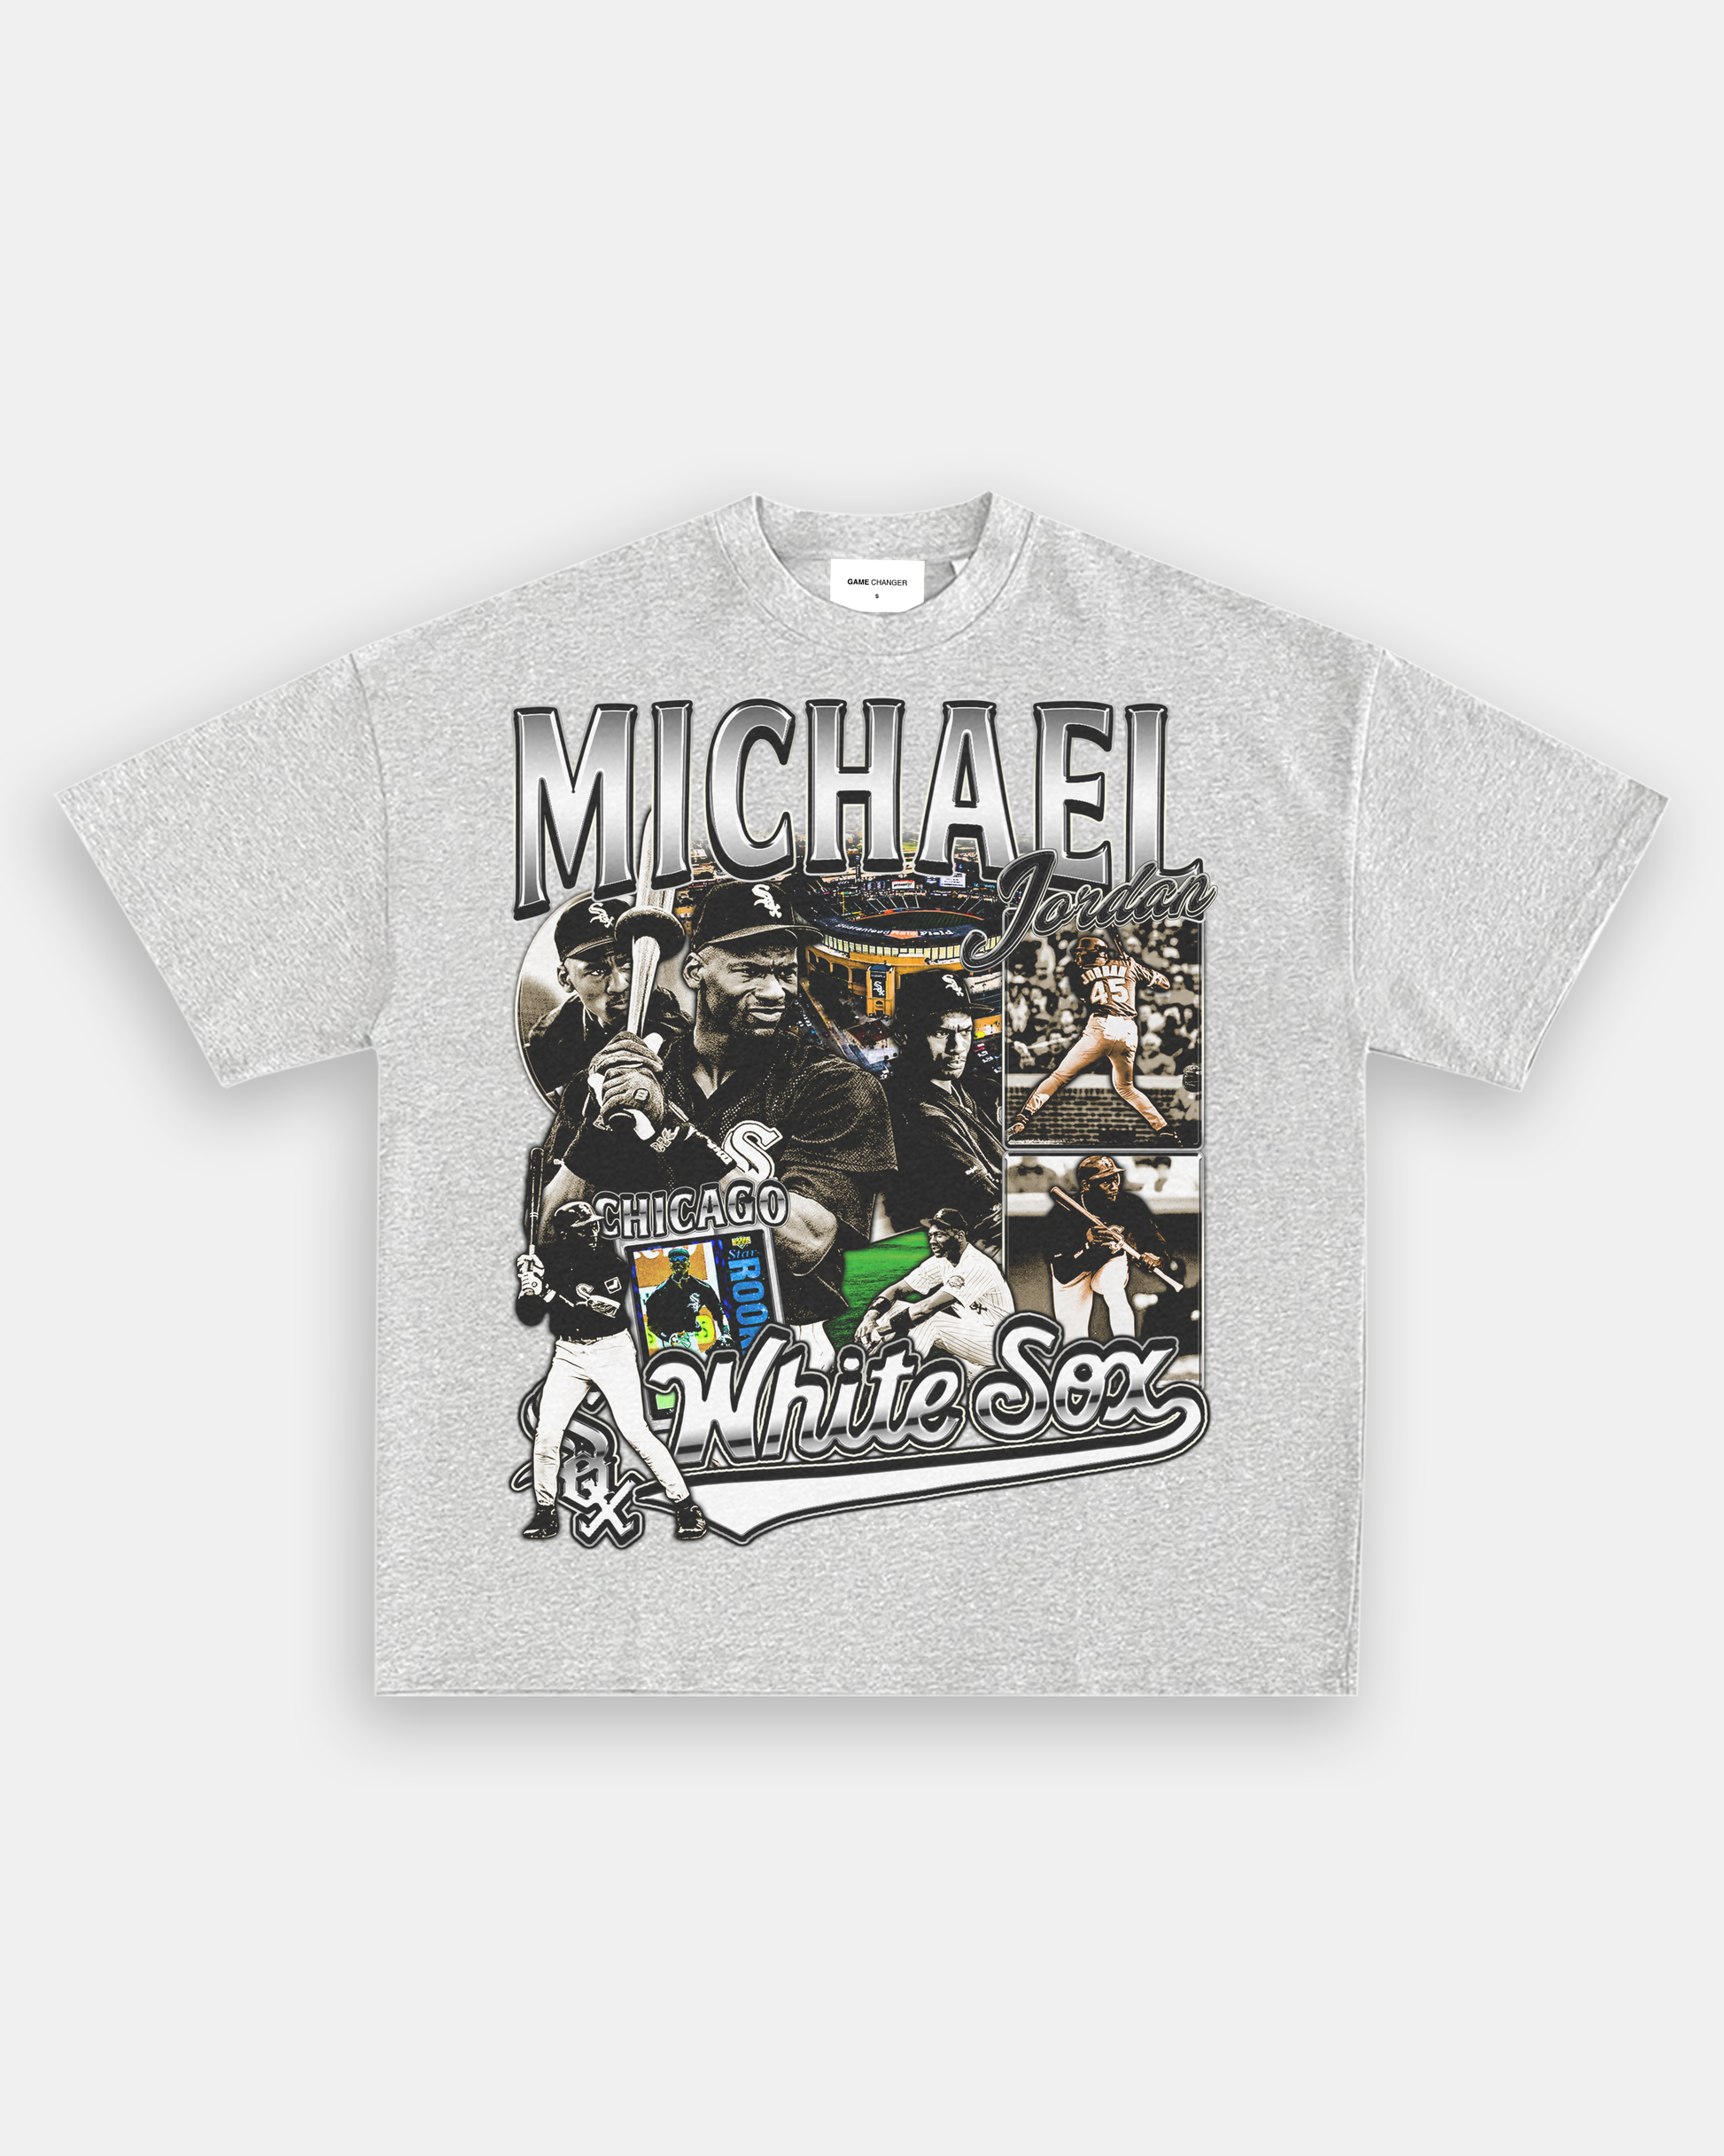 Michael Jordan Chicago White Sox baseball player Vintage shirt